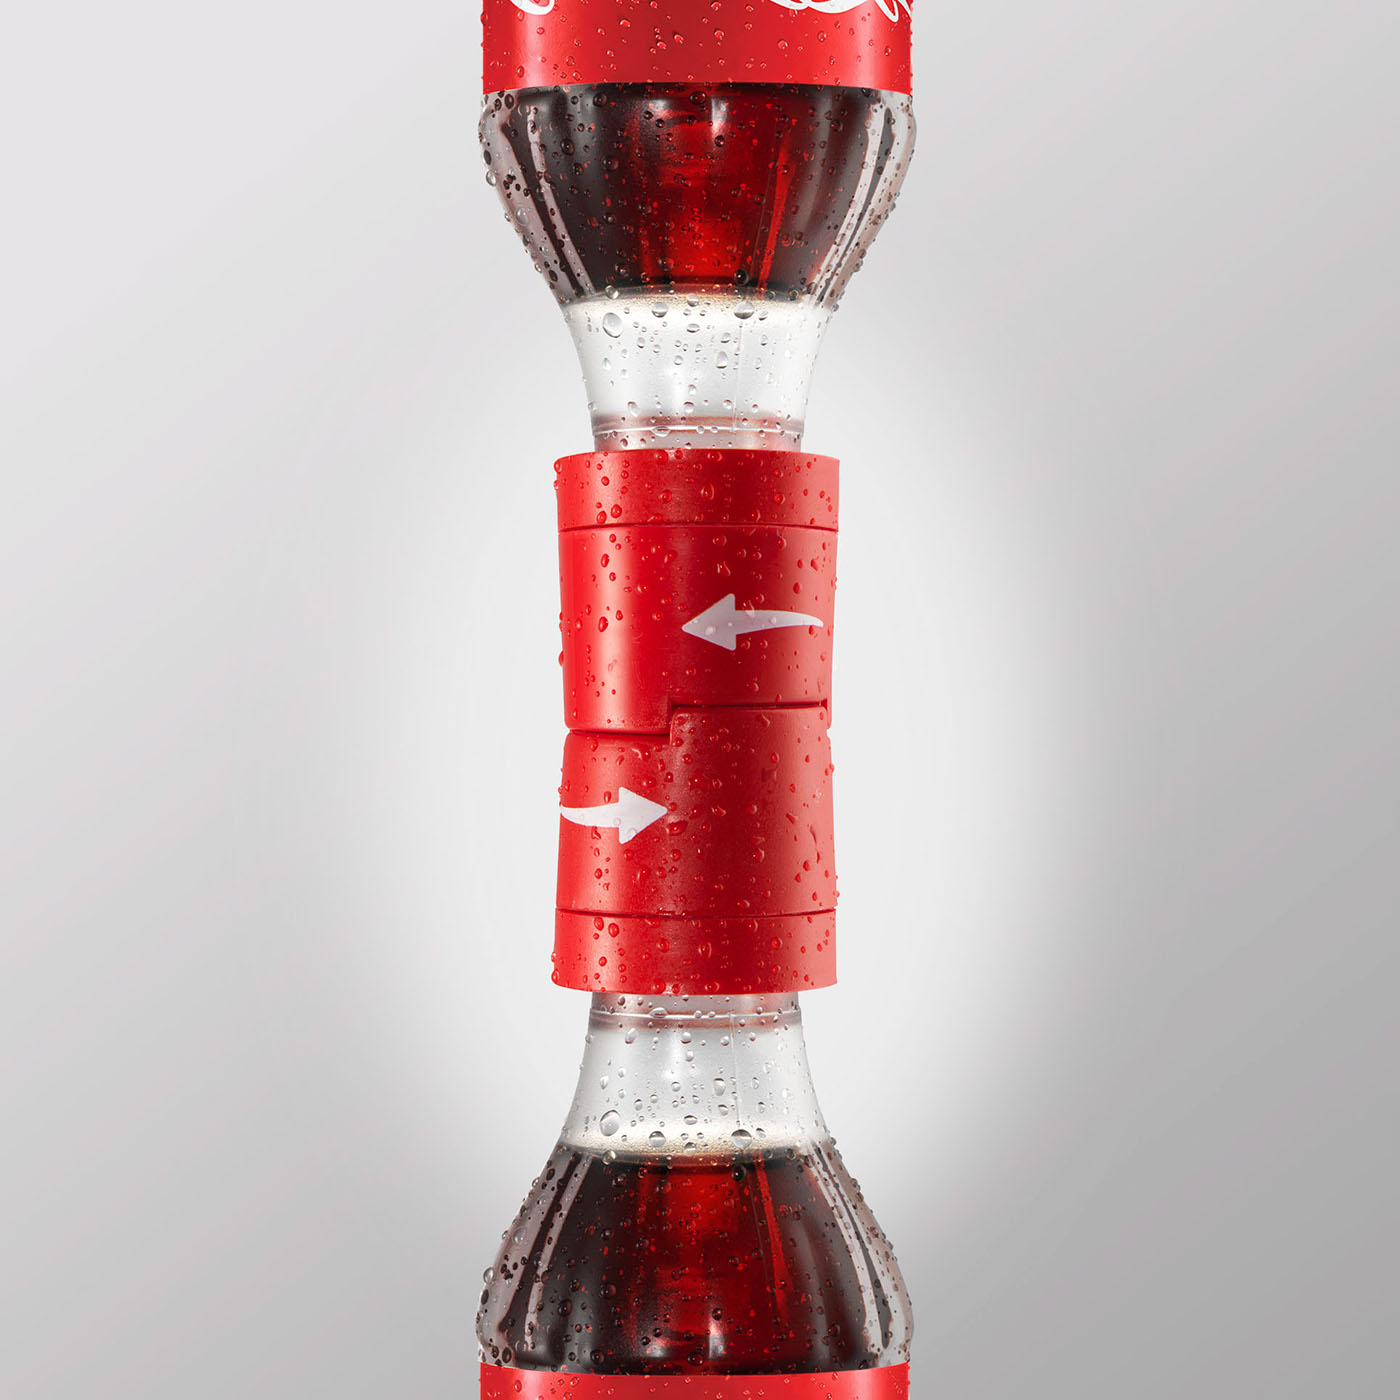 The friendly twist Coca-Cola leoburnett Twist friendly design colombia cap red david muñoz